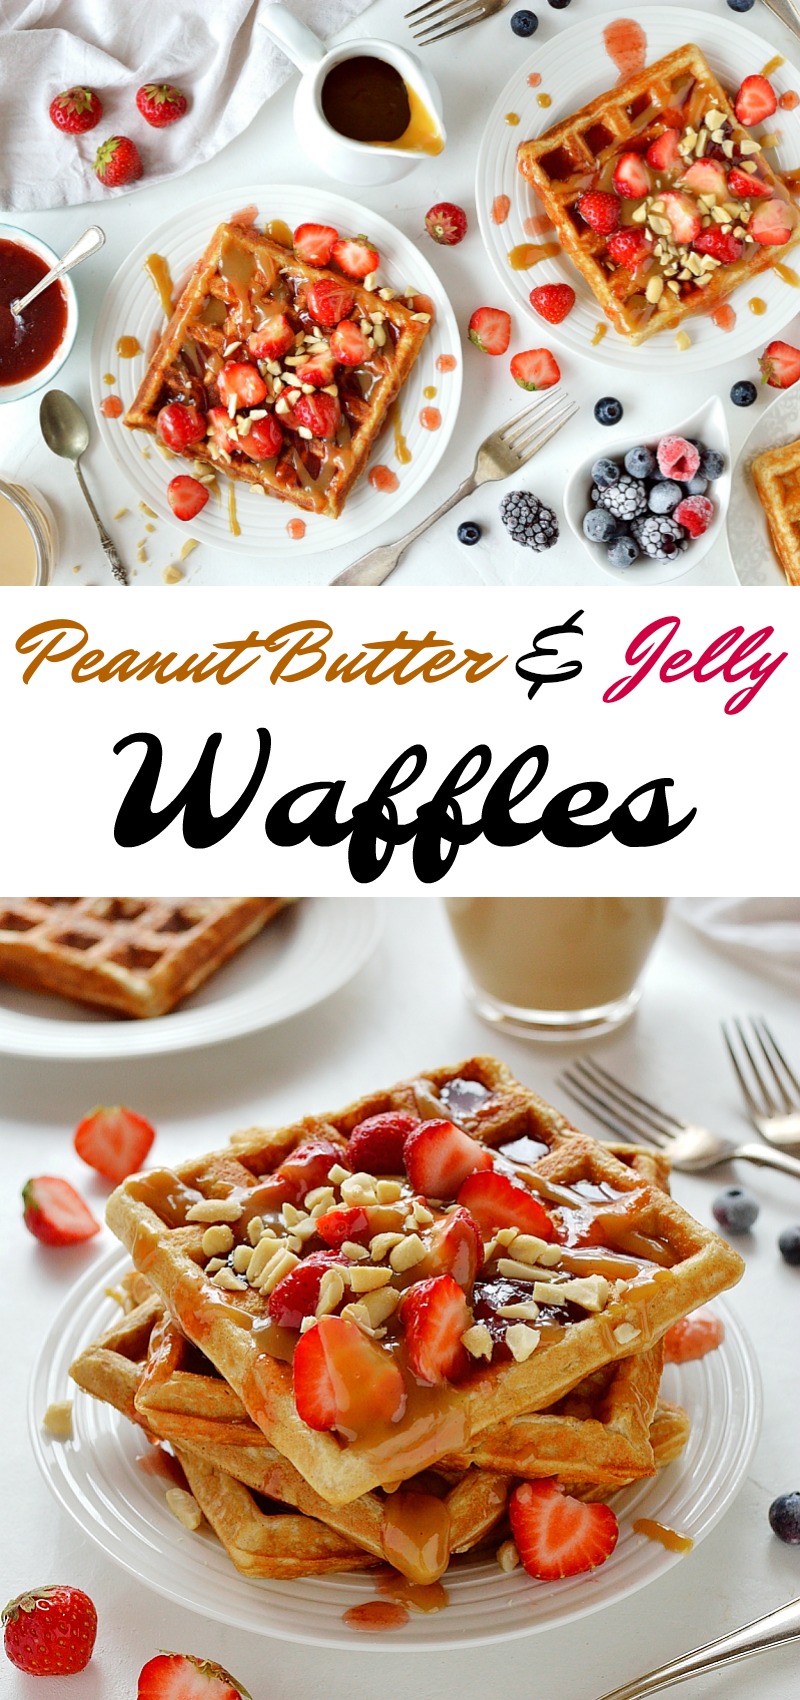 Pb&j waffles pinterest